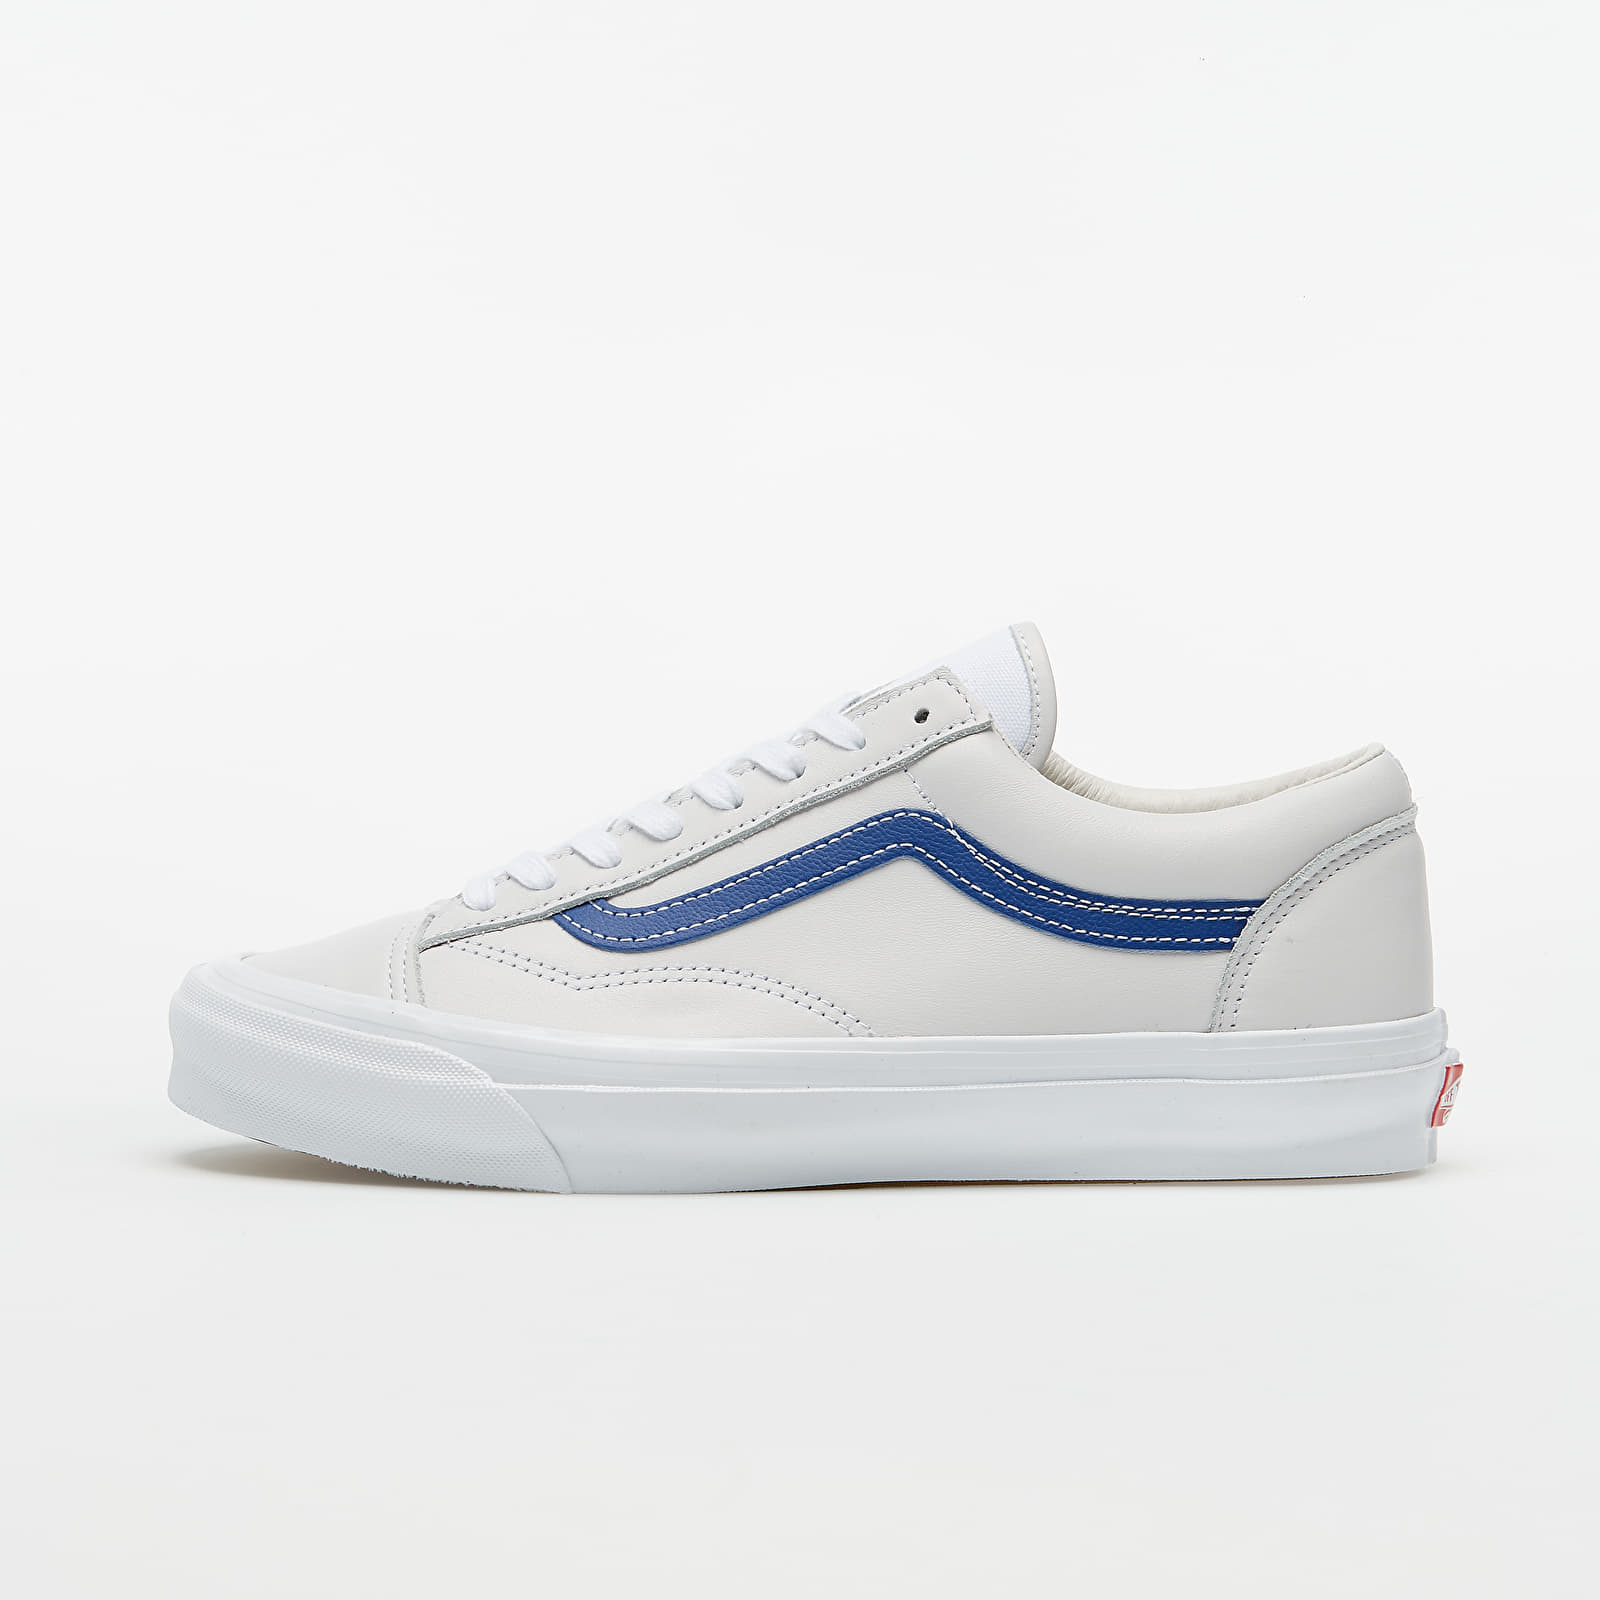 Men's shoes Vans Vault OG Style 36 LX (Leather) Blue/ True White